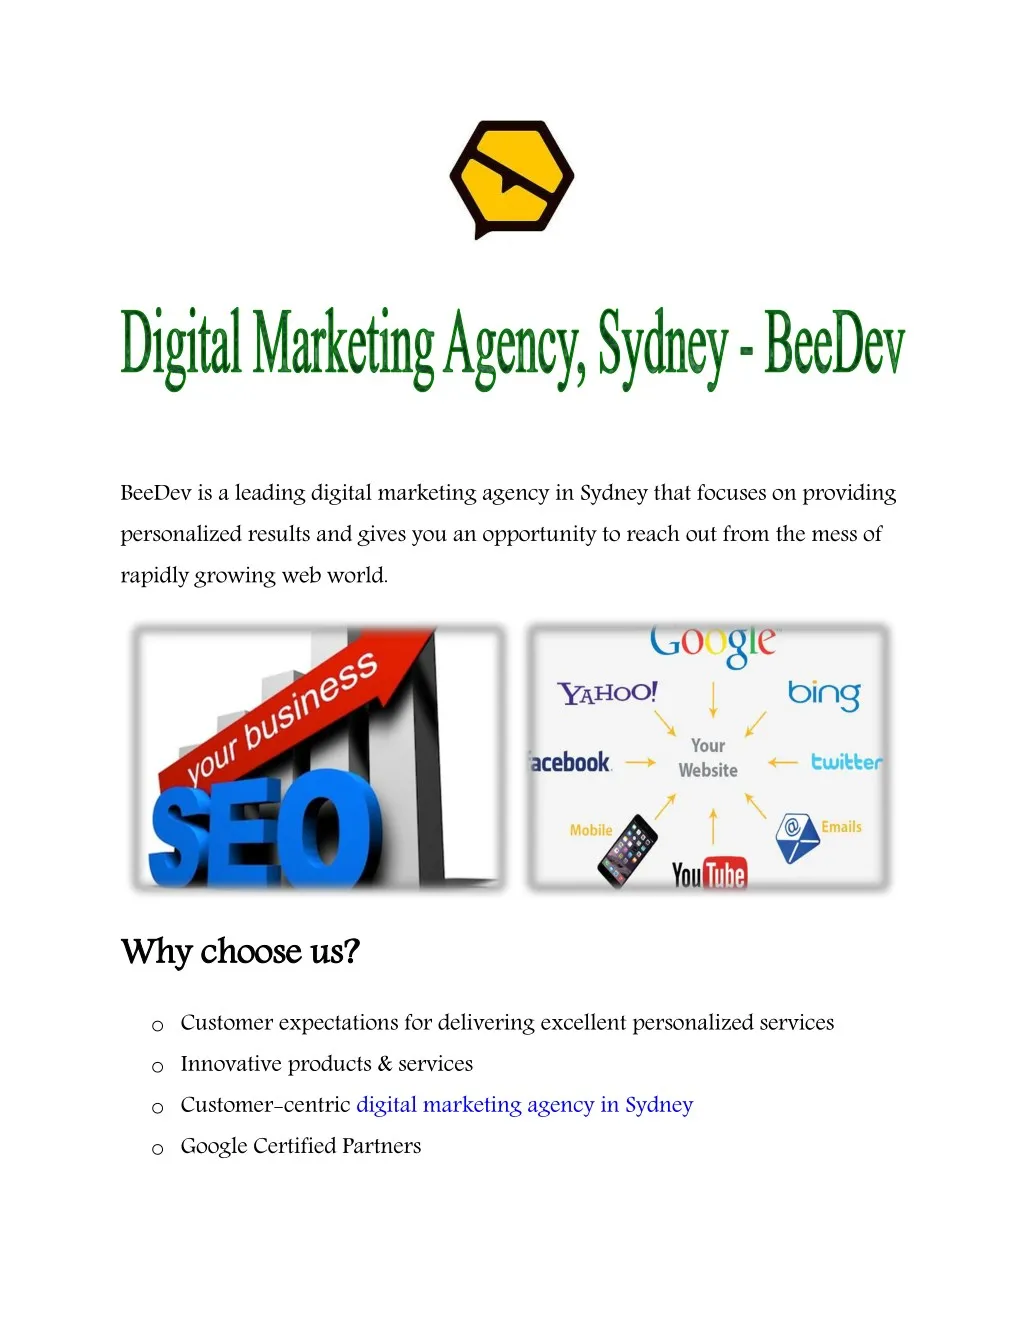 beedev is a leading digital marketing agency